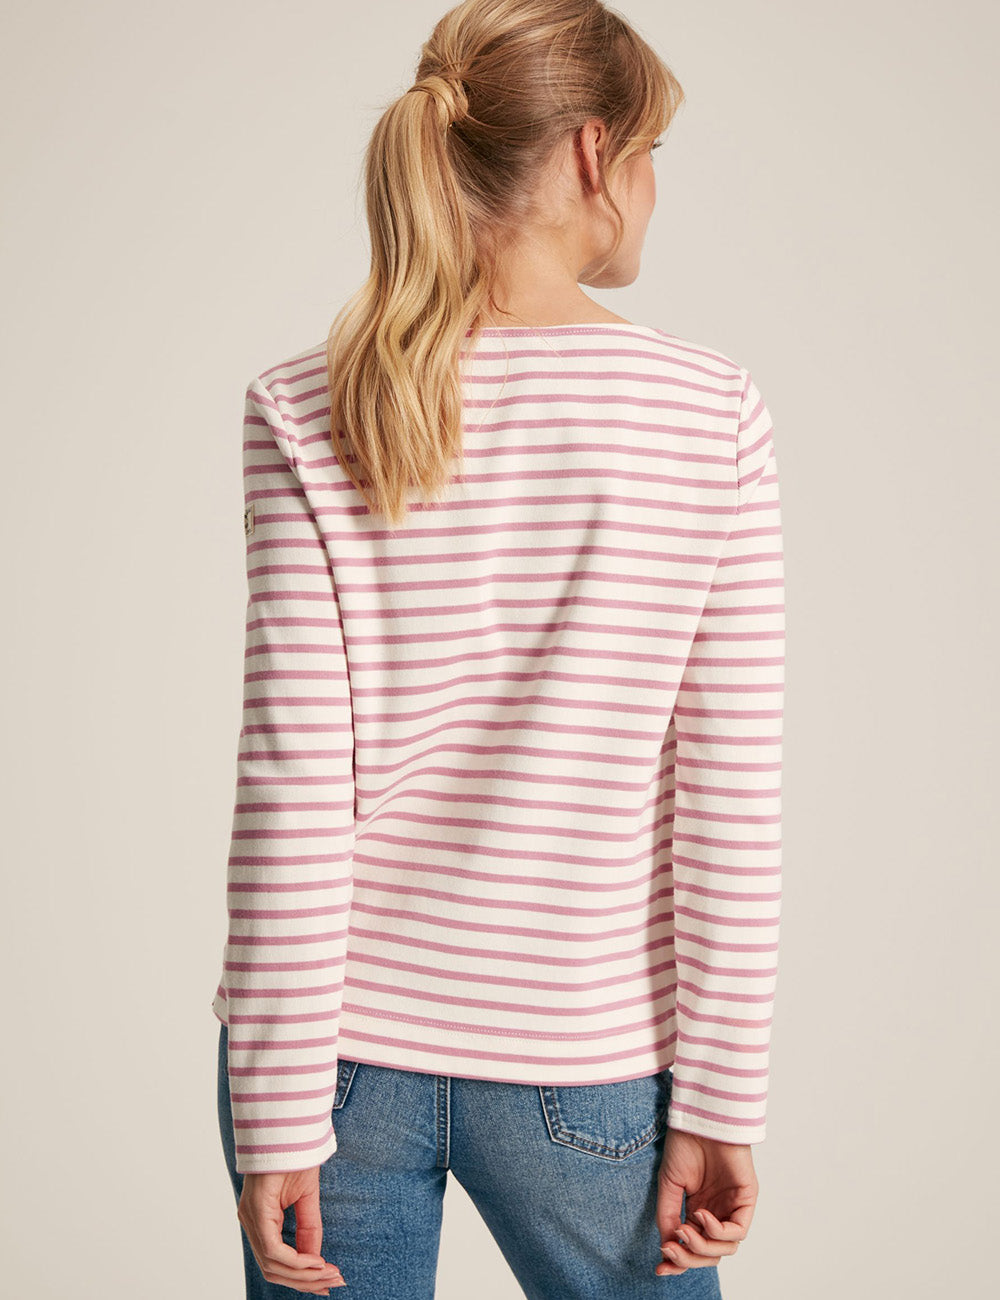 Joules Harbour Long Sleeve Top - Pink Stripe